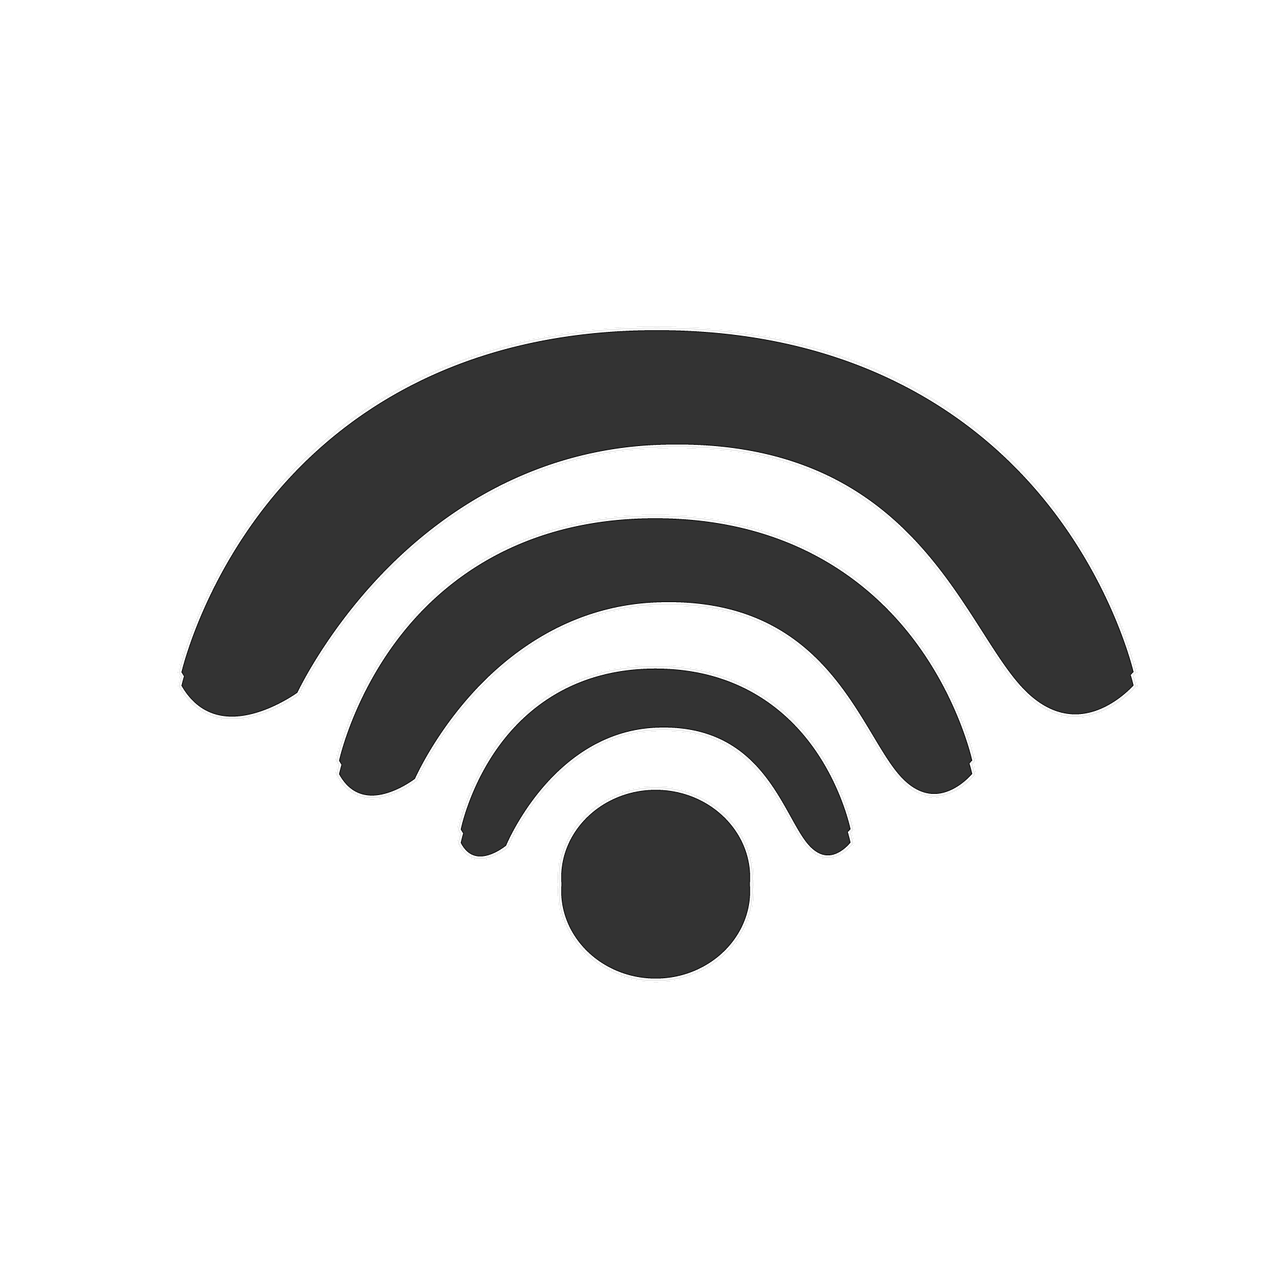 Wifi over wifi. Знак вай фай. Wi Fi иконка. Пиктограмма WIFI. Значок Wi-Fi сигнала.